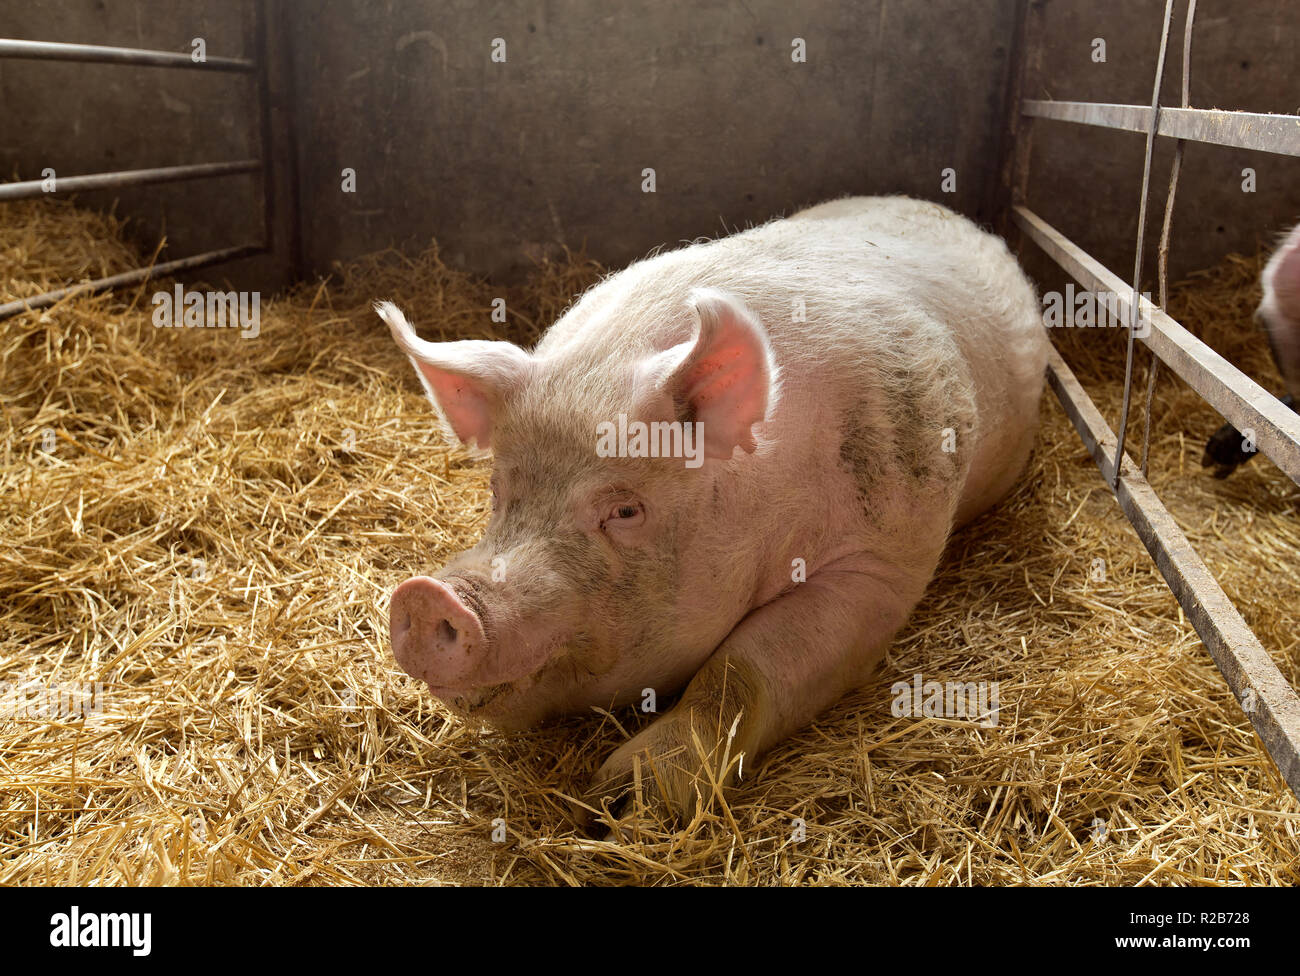 Boar resting in comfort, straw bedded pen 'Sus scrofa domesticus'. Stock Photo